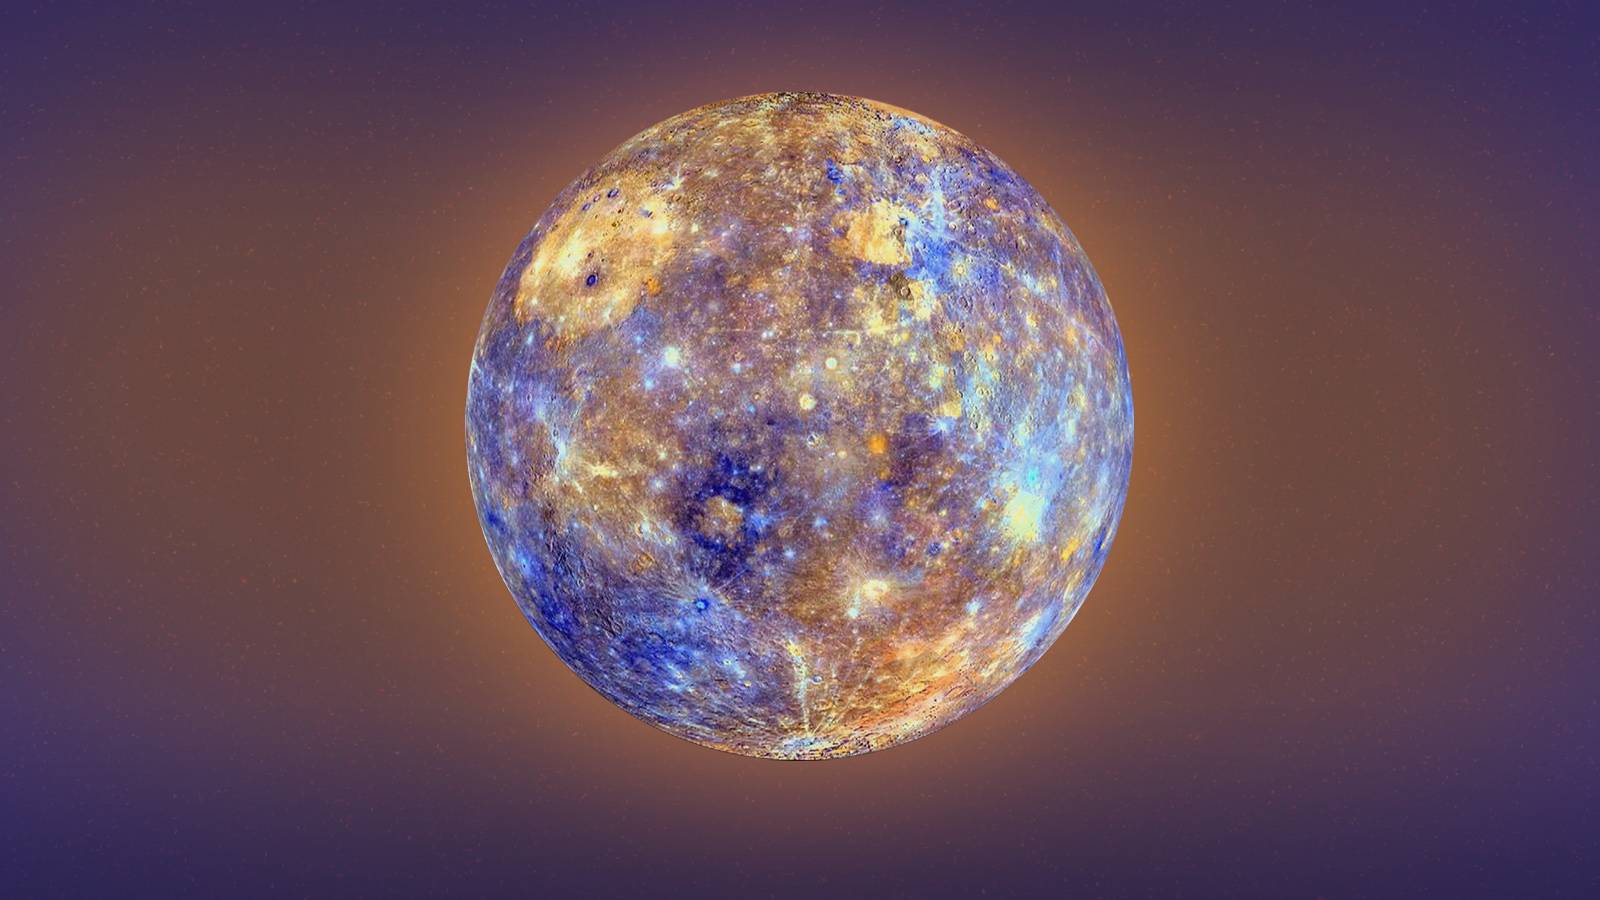 Planet Mercury observation